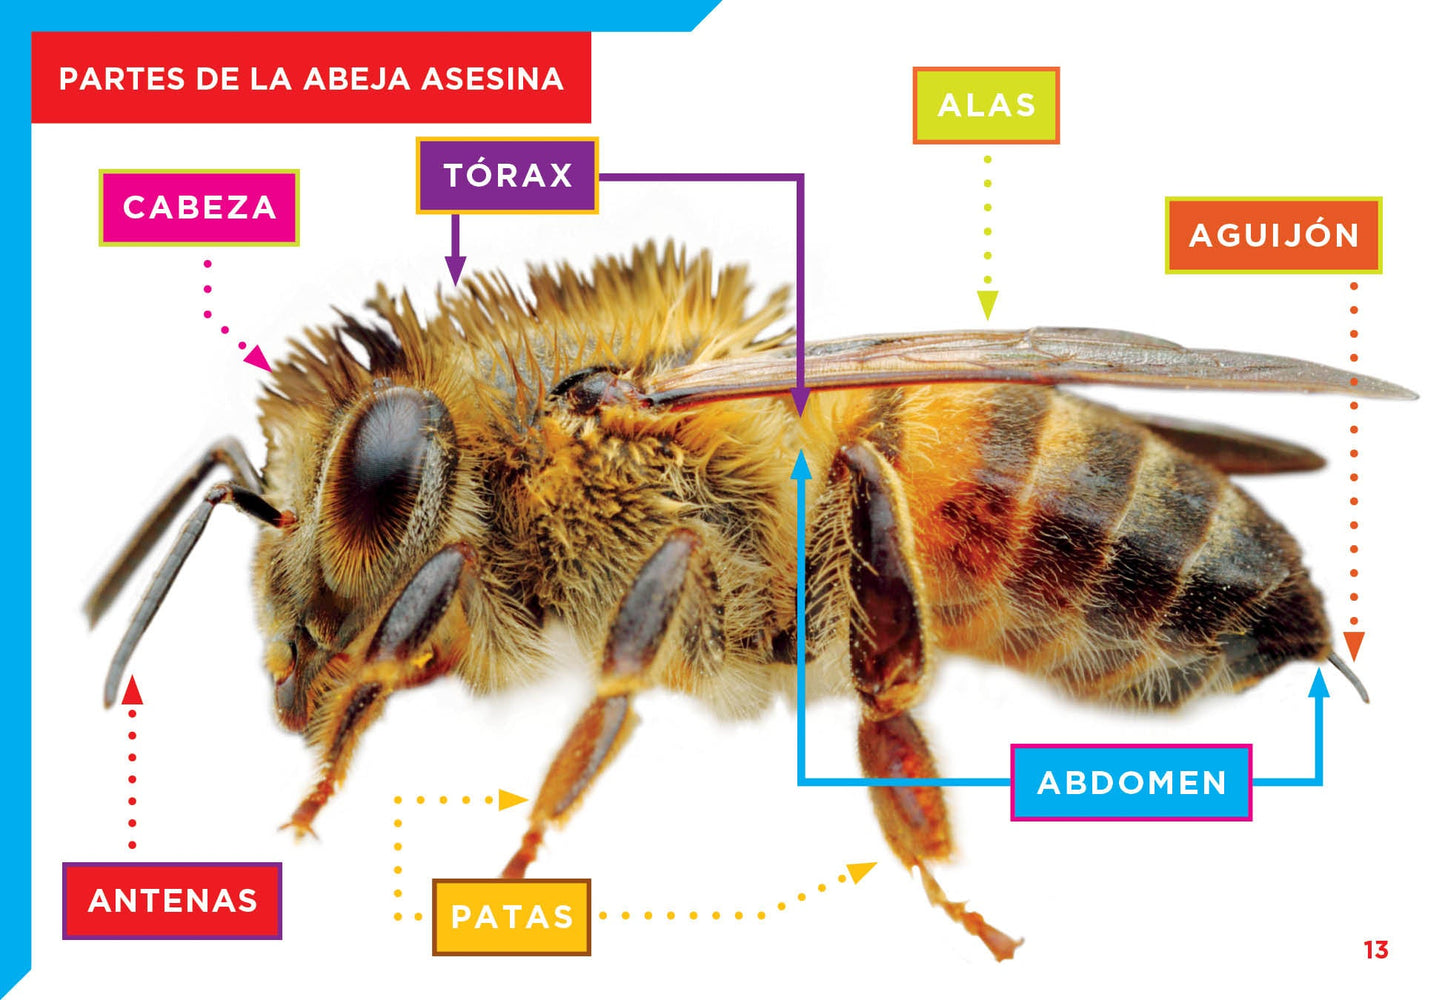 Bichos peligrosos: La abeja asesina